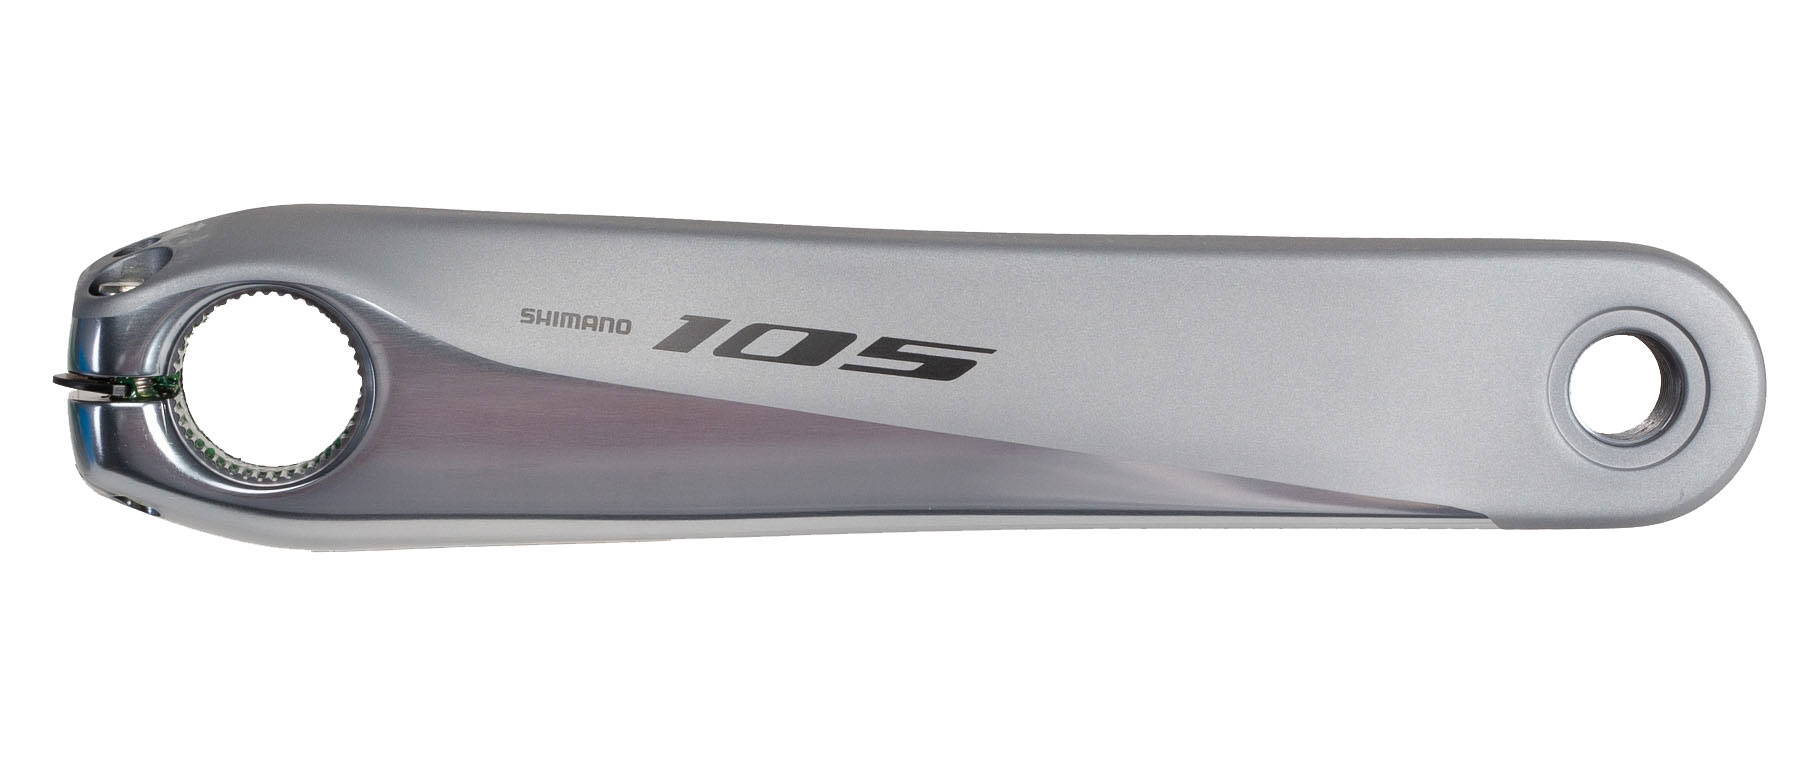 Shimano 105 FC-R7000 Crankset